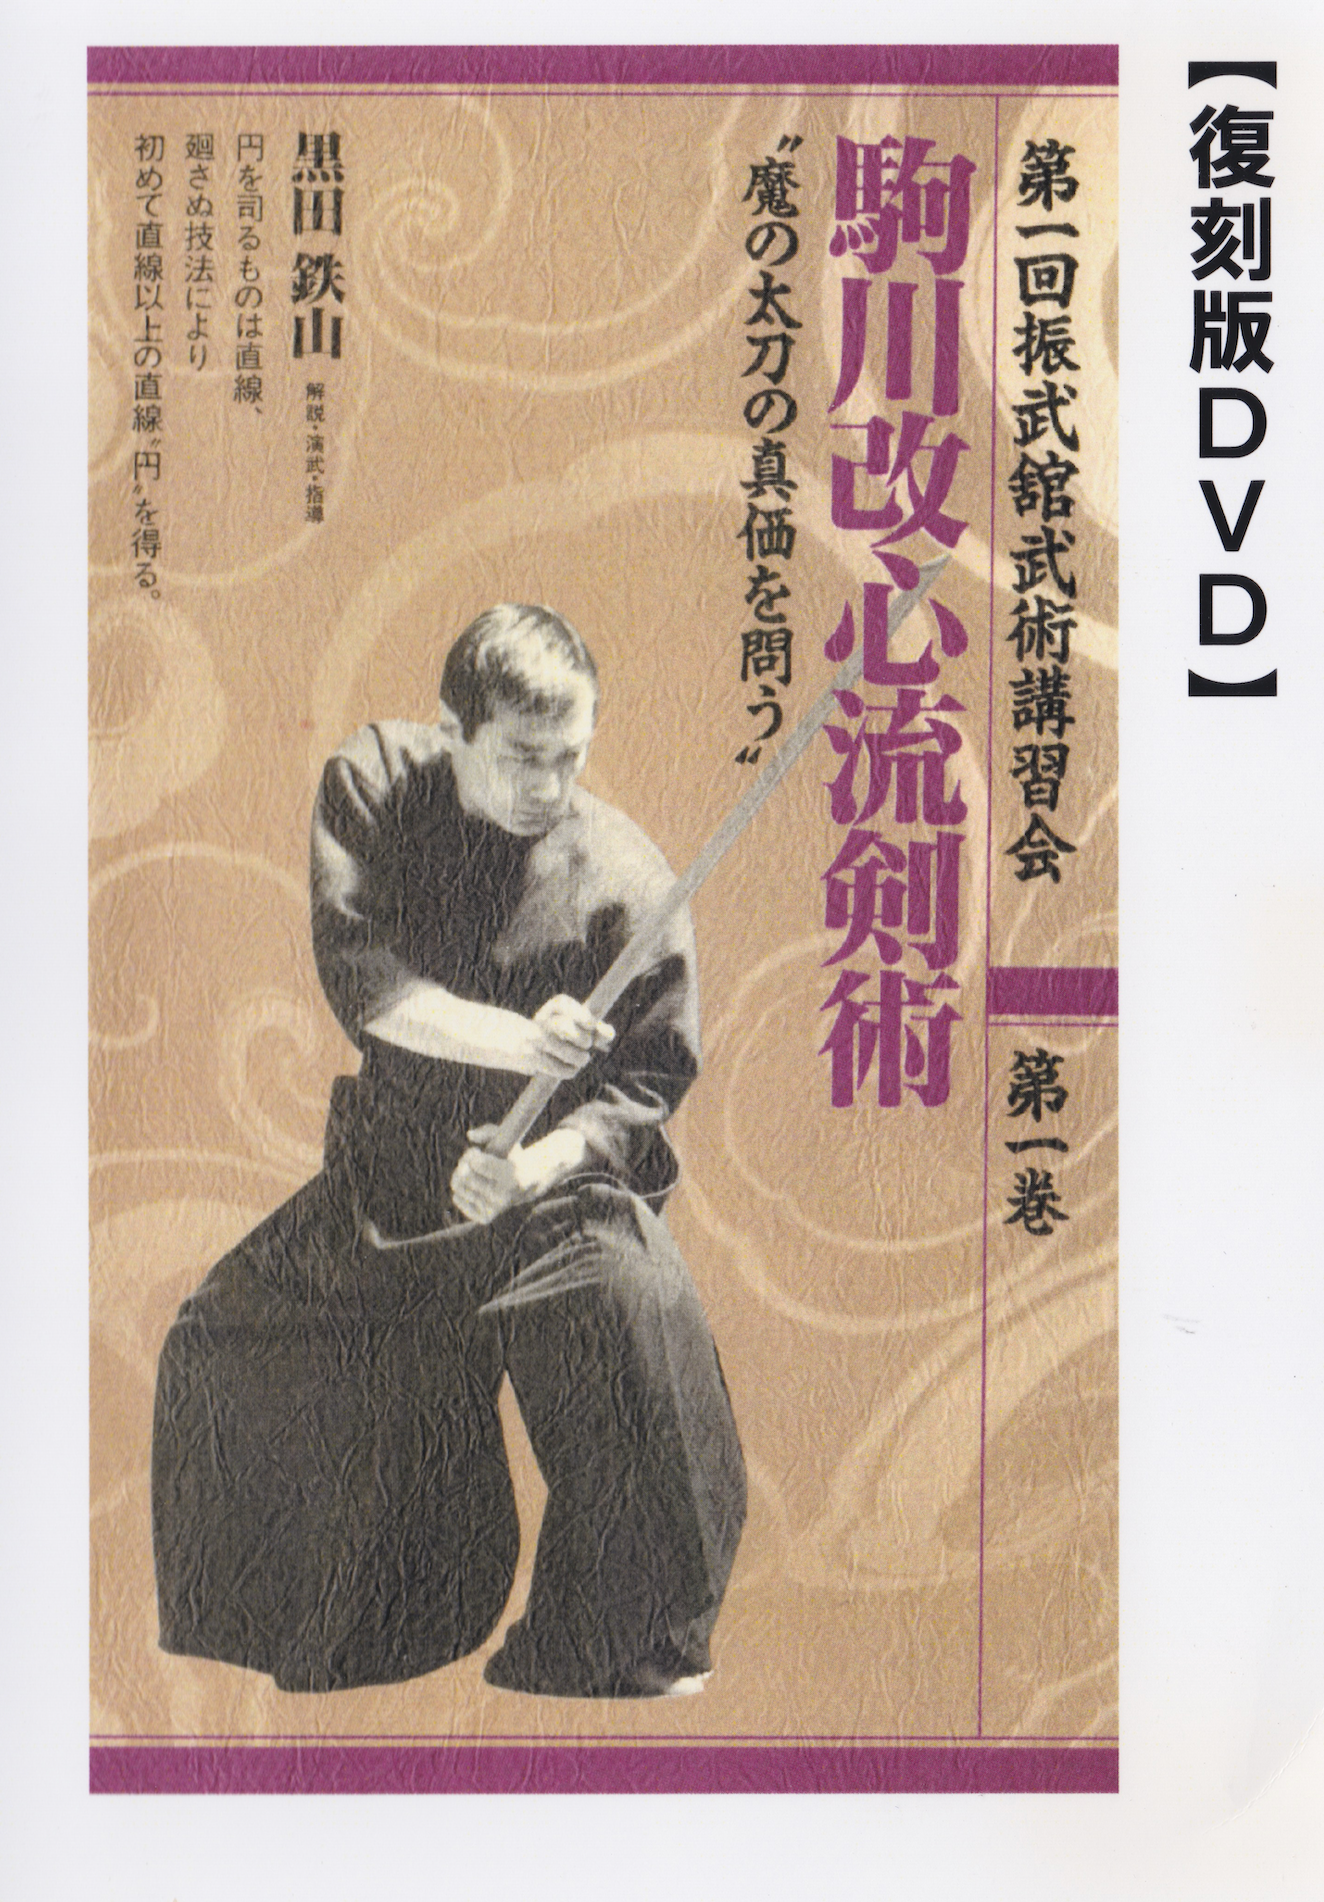 1st Shinbukan Martial Arts Seminar Vol 1 DVD by Tetsuzan Kuroda